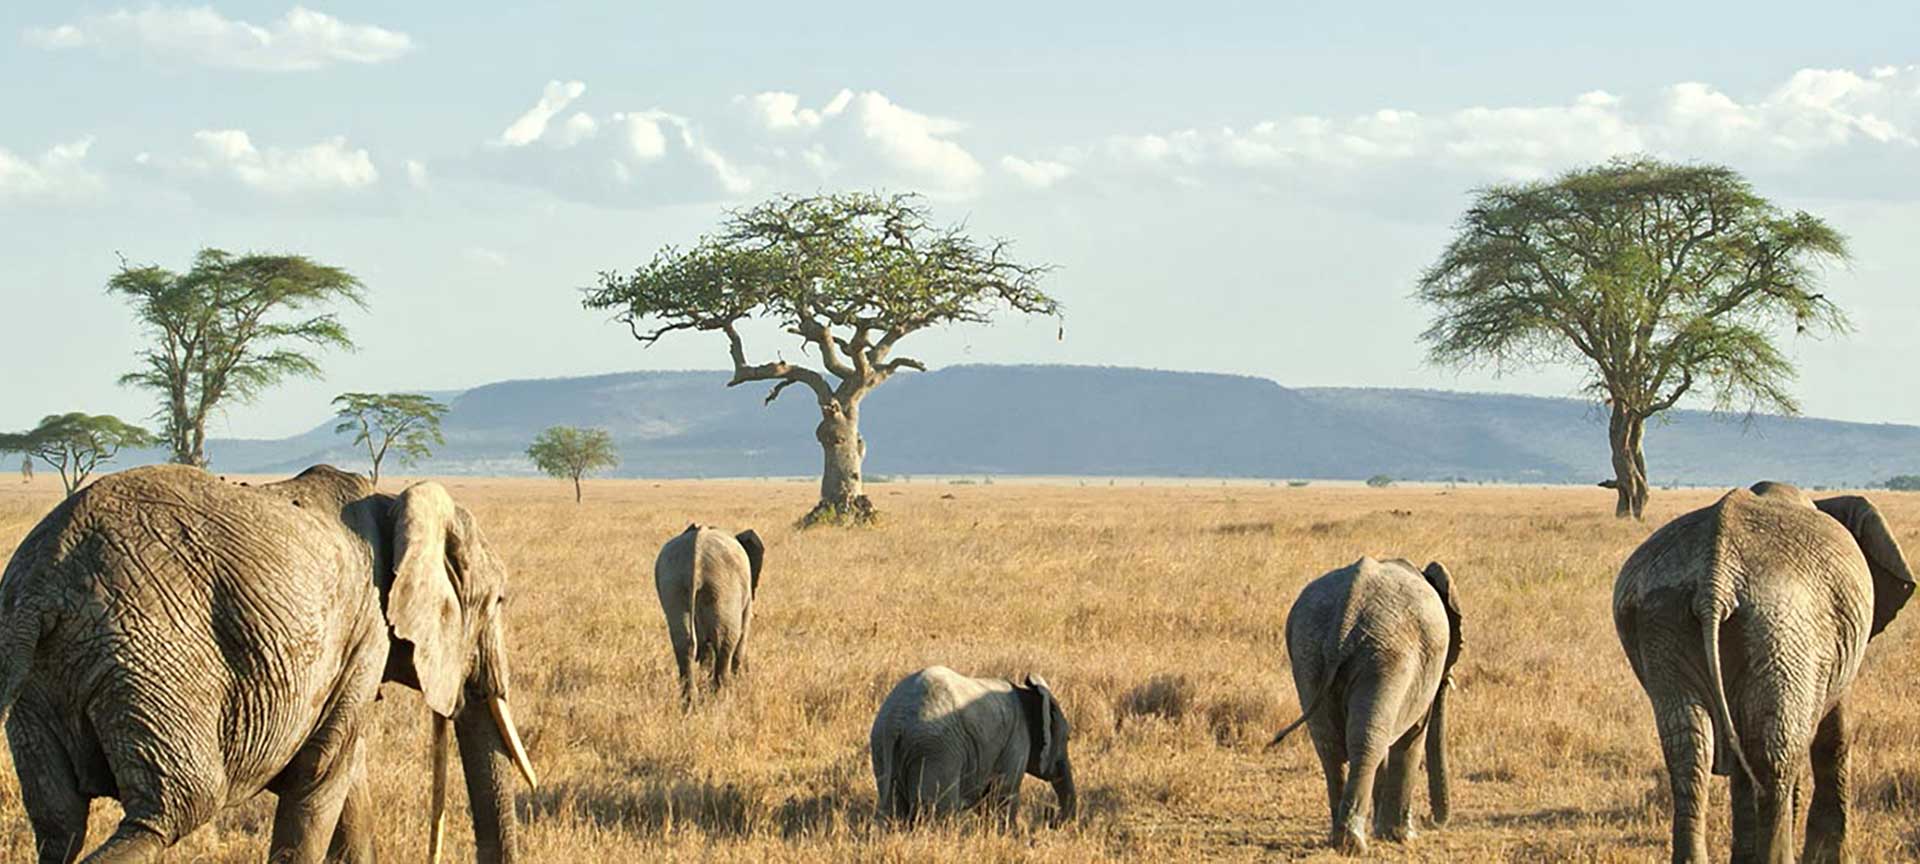 Elephants in the Serengetti in Tanzania walk away from camera